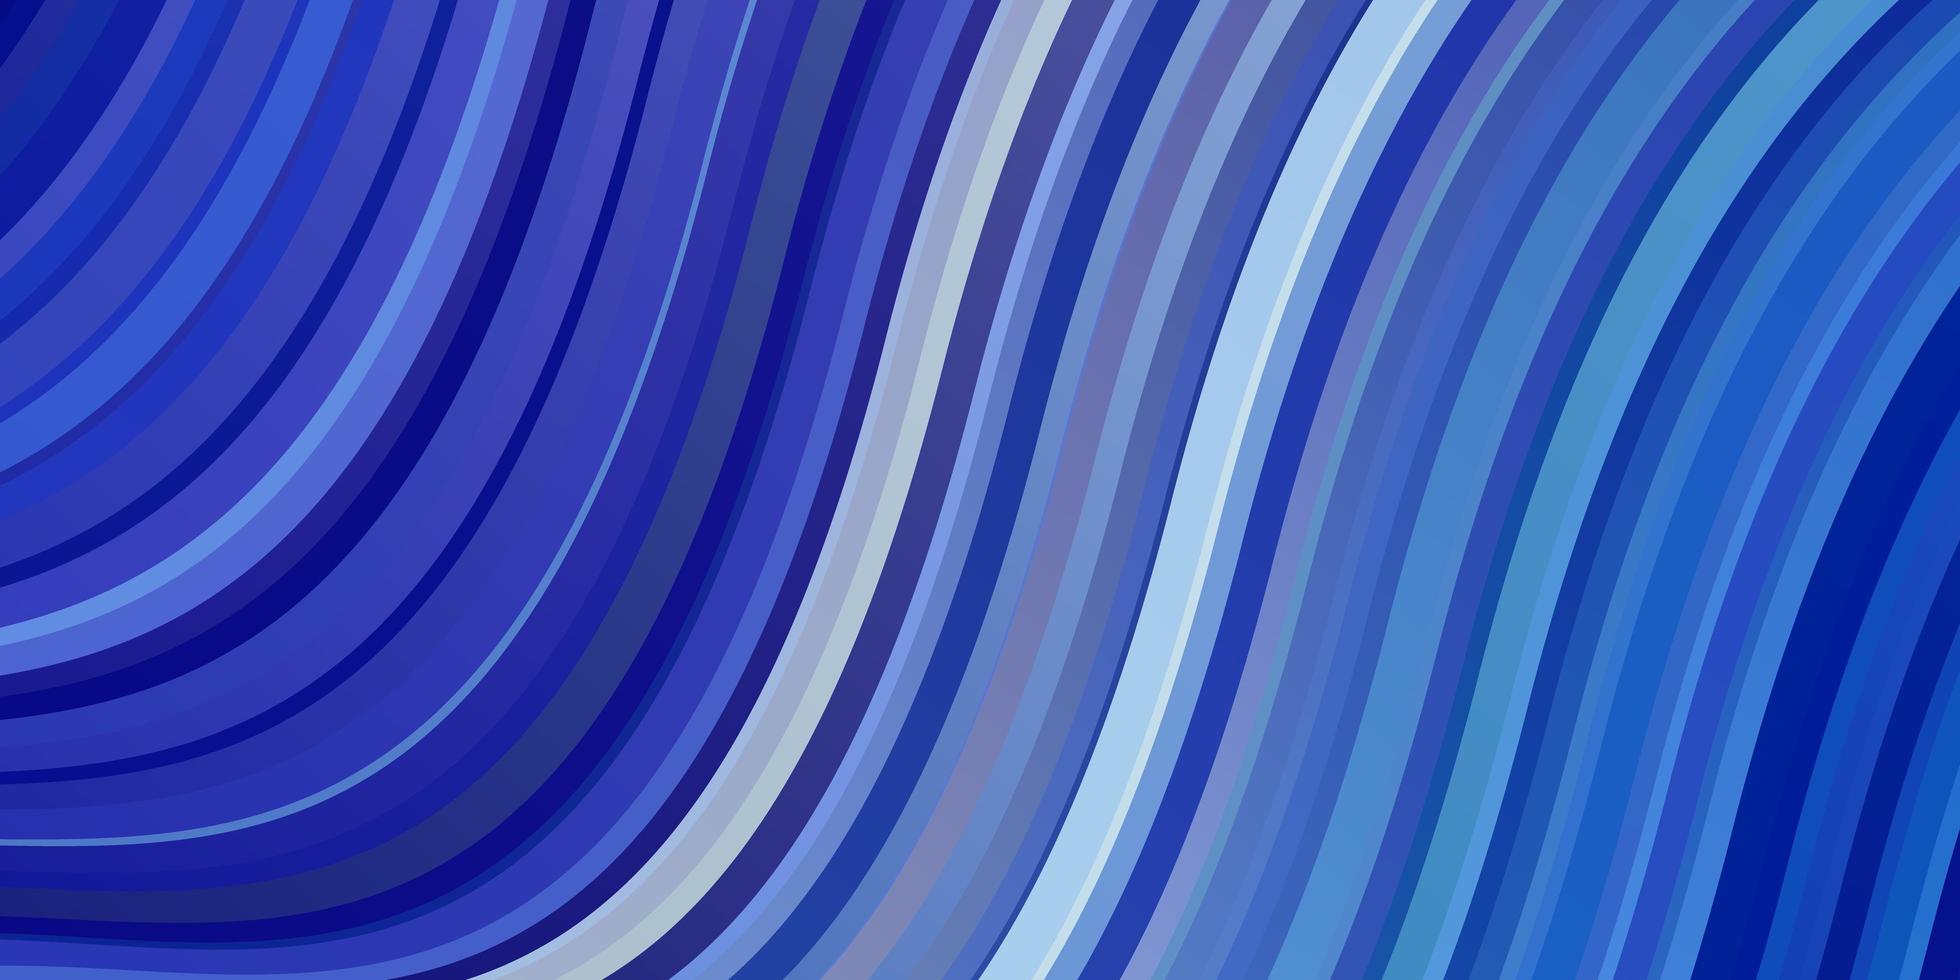 ljusrosa, blå vektorstruktur med sneda linjer. vektor